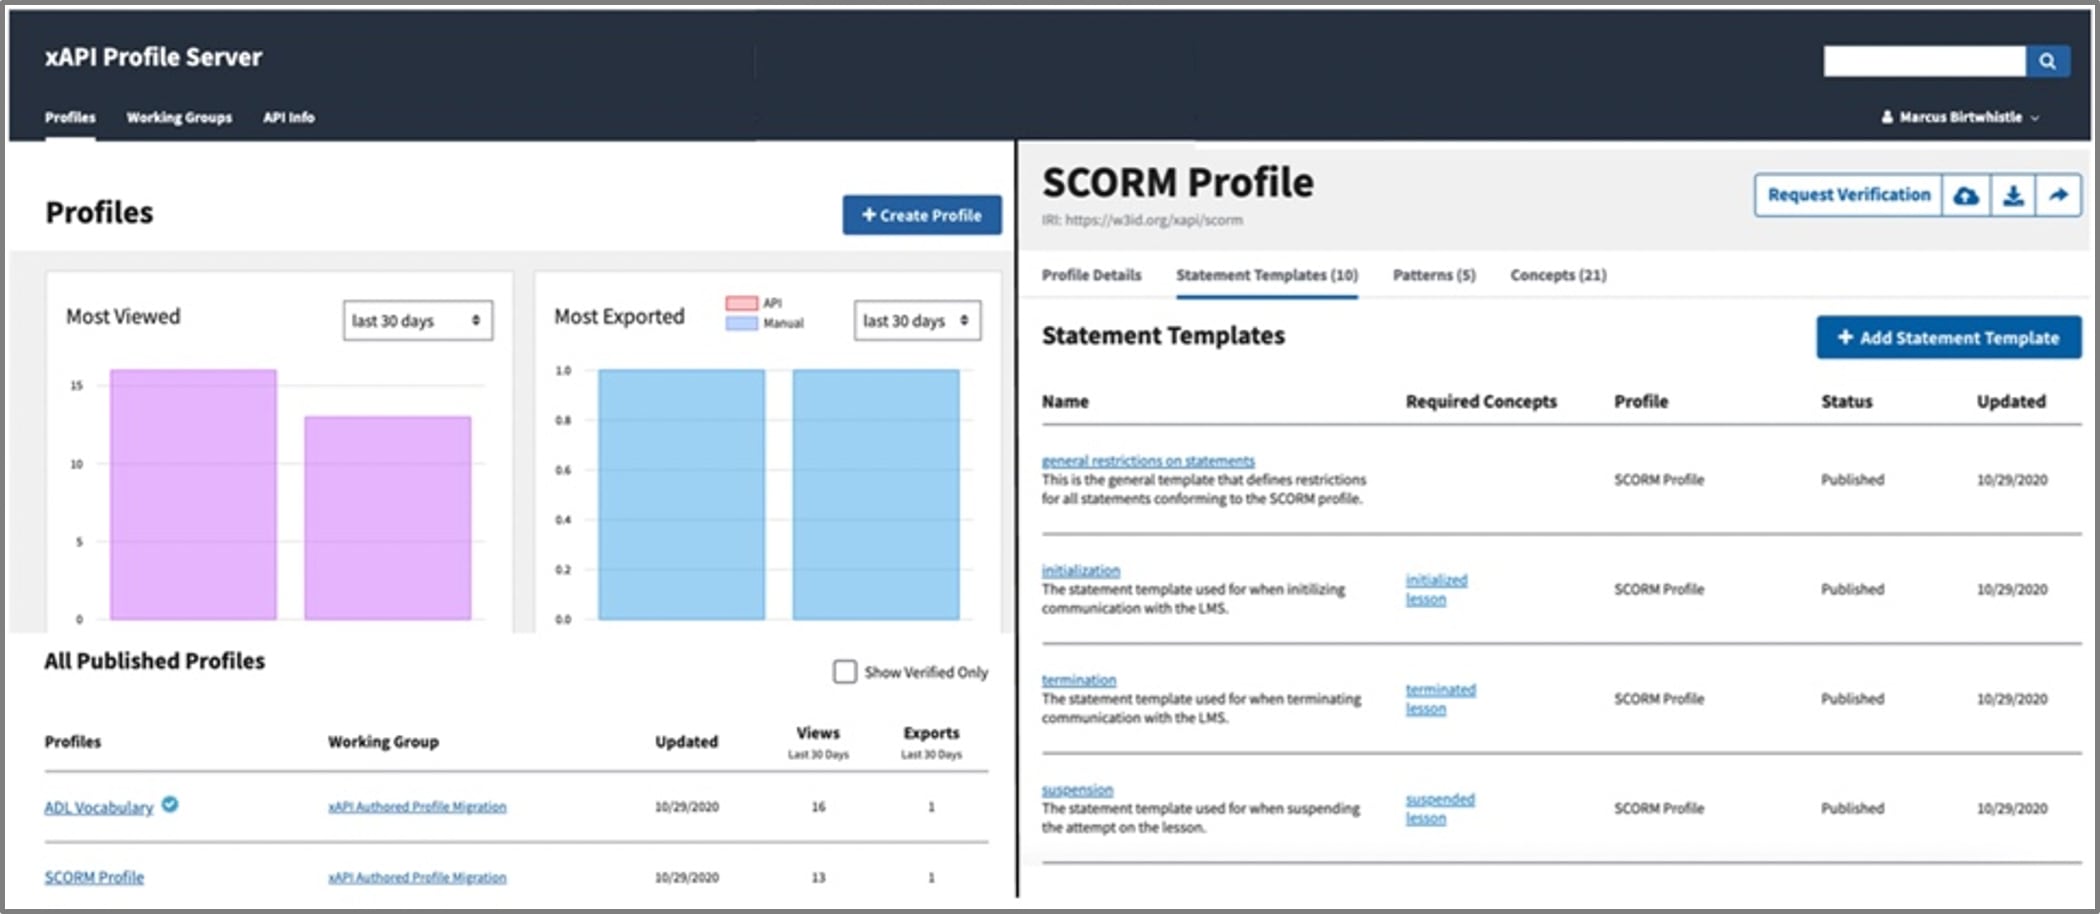 Screenshot of xAPI Profile Server showing profiles and SCORM Profile